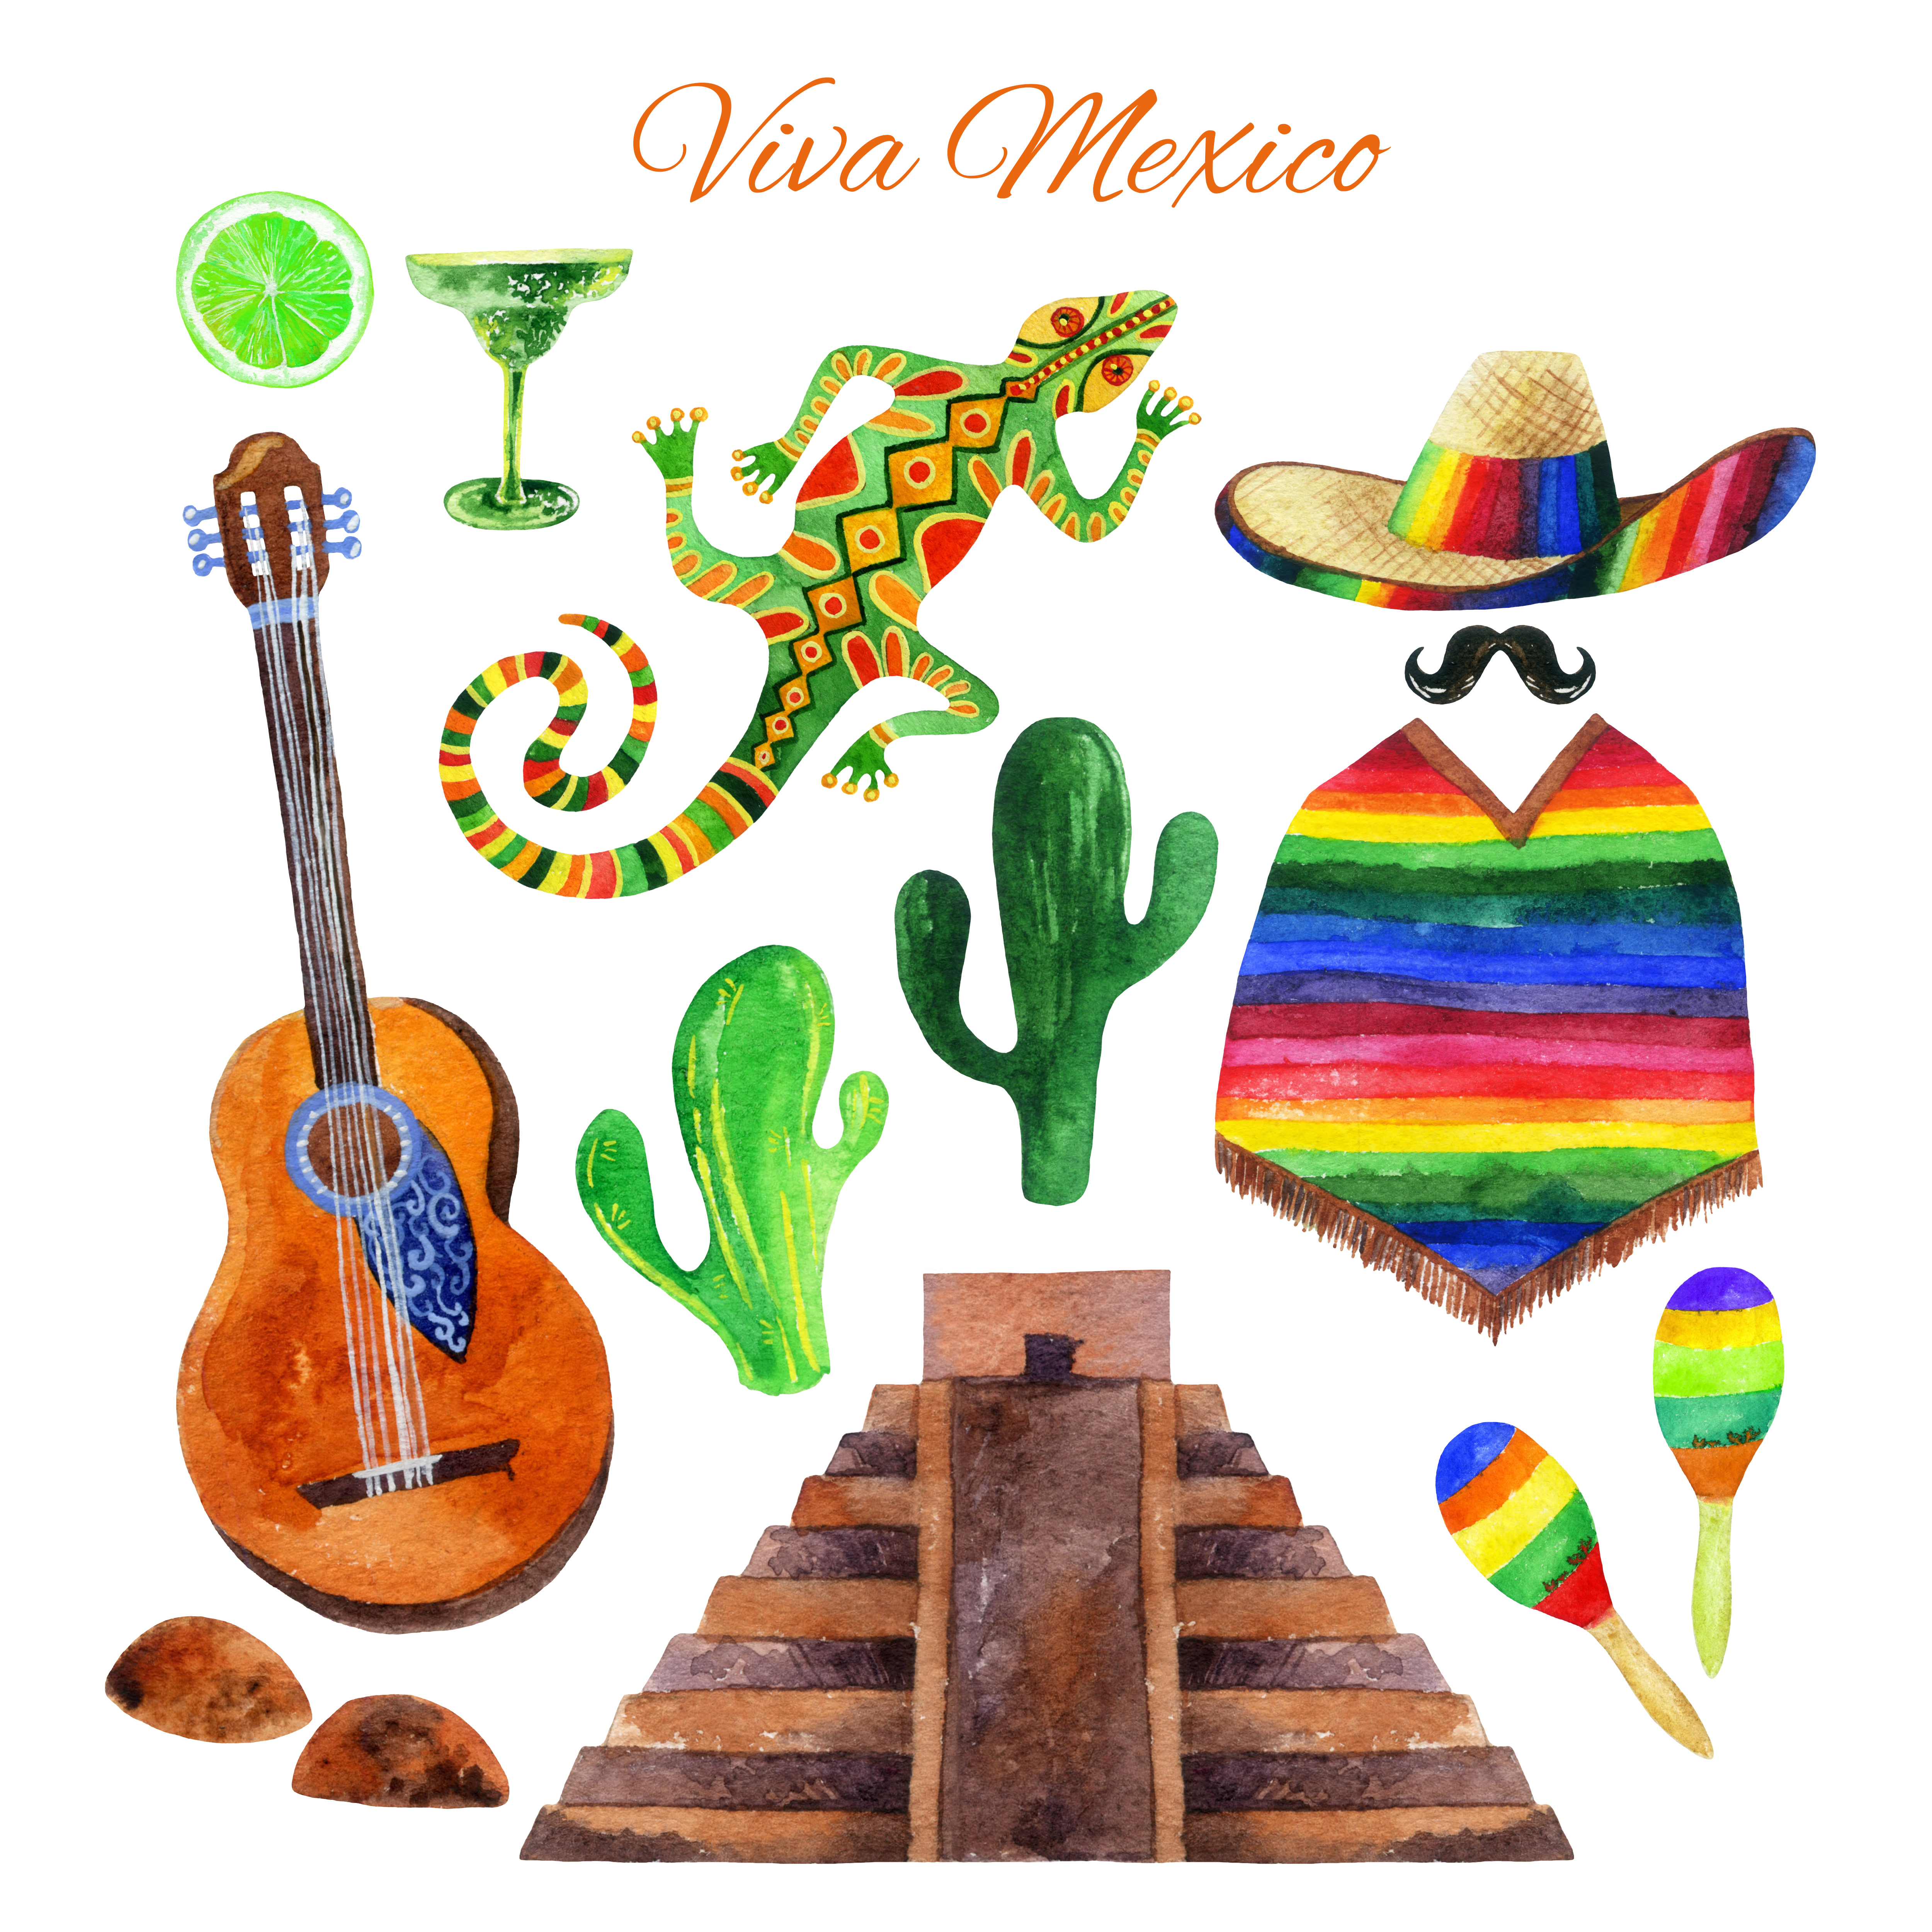 Says "Viva Mexico".  Picture shows a guitar, lizard, cactus, sombrero, poncho, maracas, and  a pyramid.